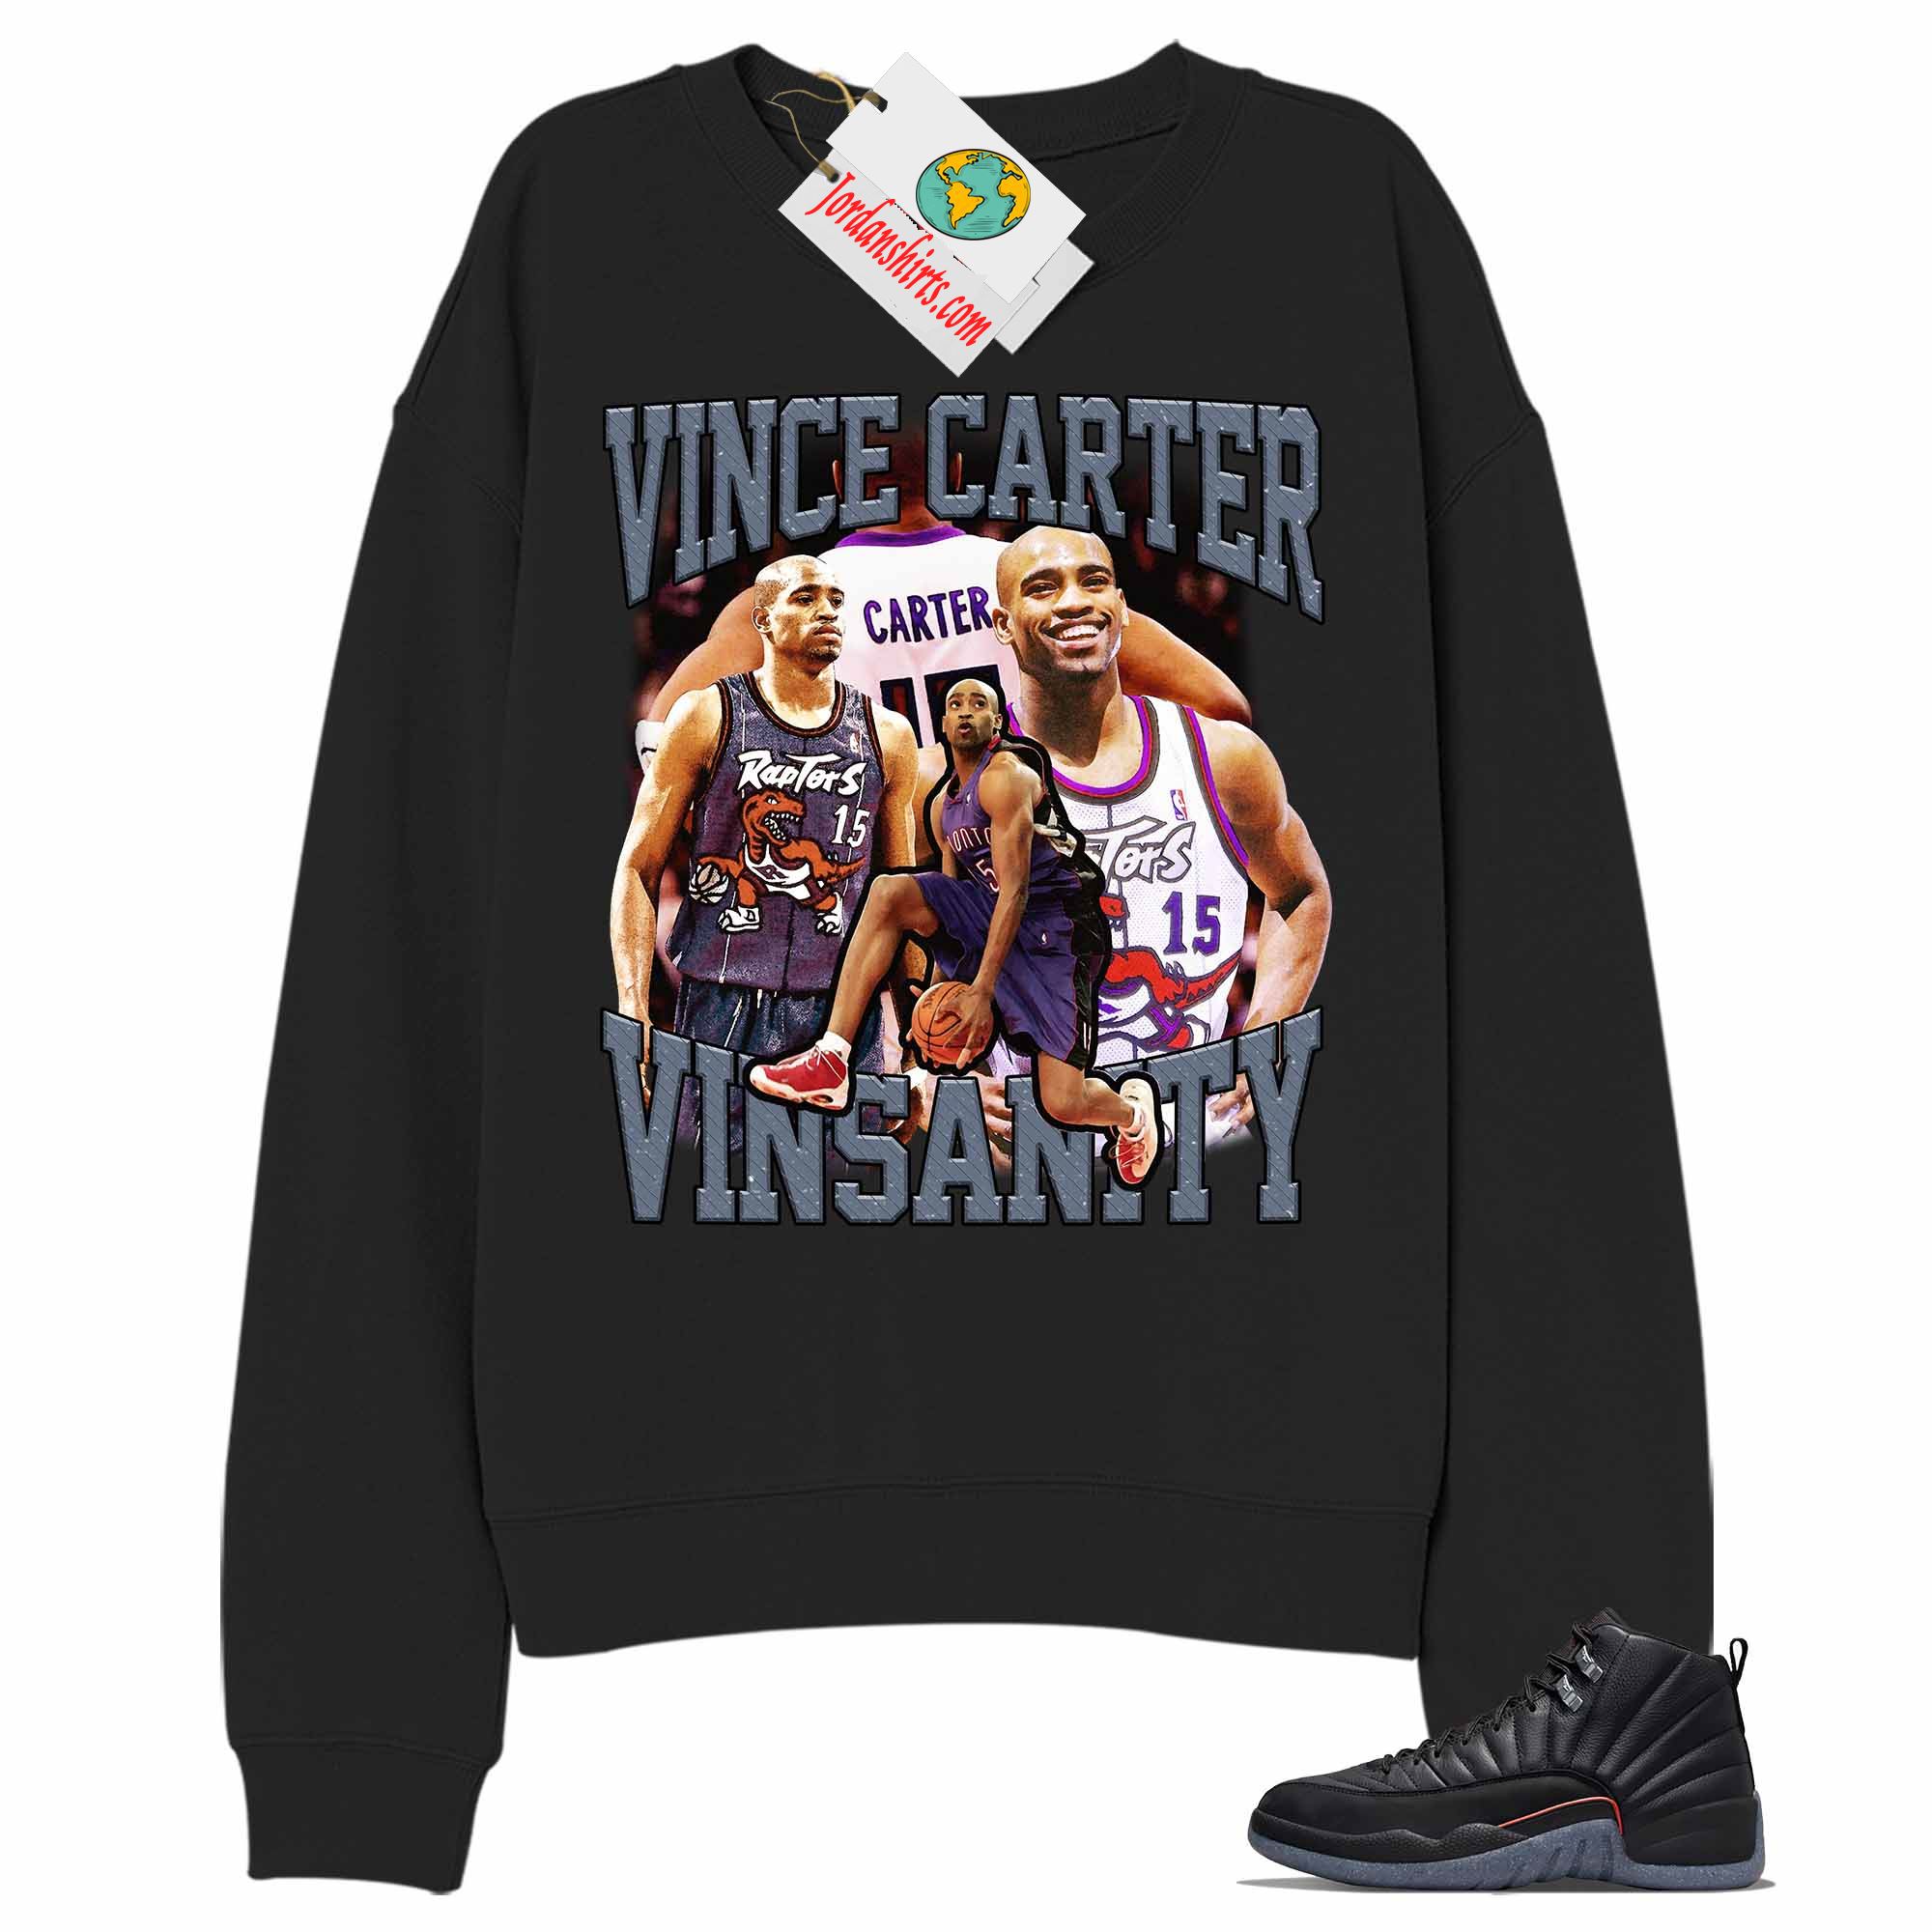 Jordan 12 Sweatshirt, Vince Carter Vinsanity Basketball 90s Retro Vintage Black Sweatshirt Air Jordan 12 Utility Grind 12s Full Size Up To 5xl